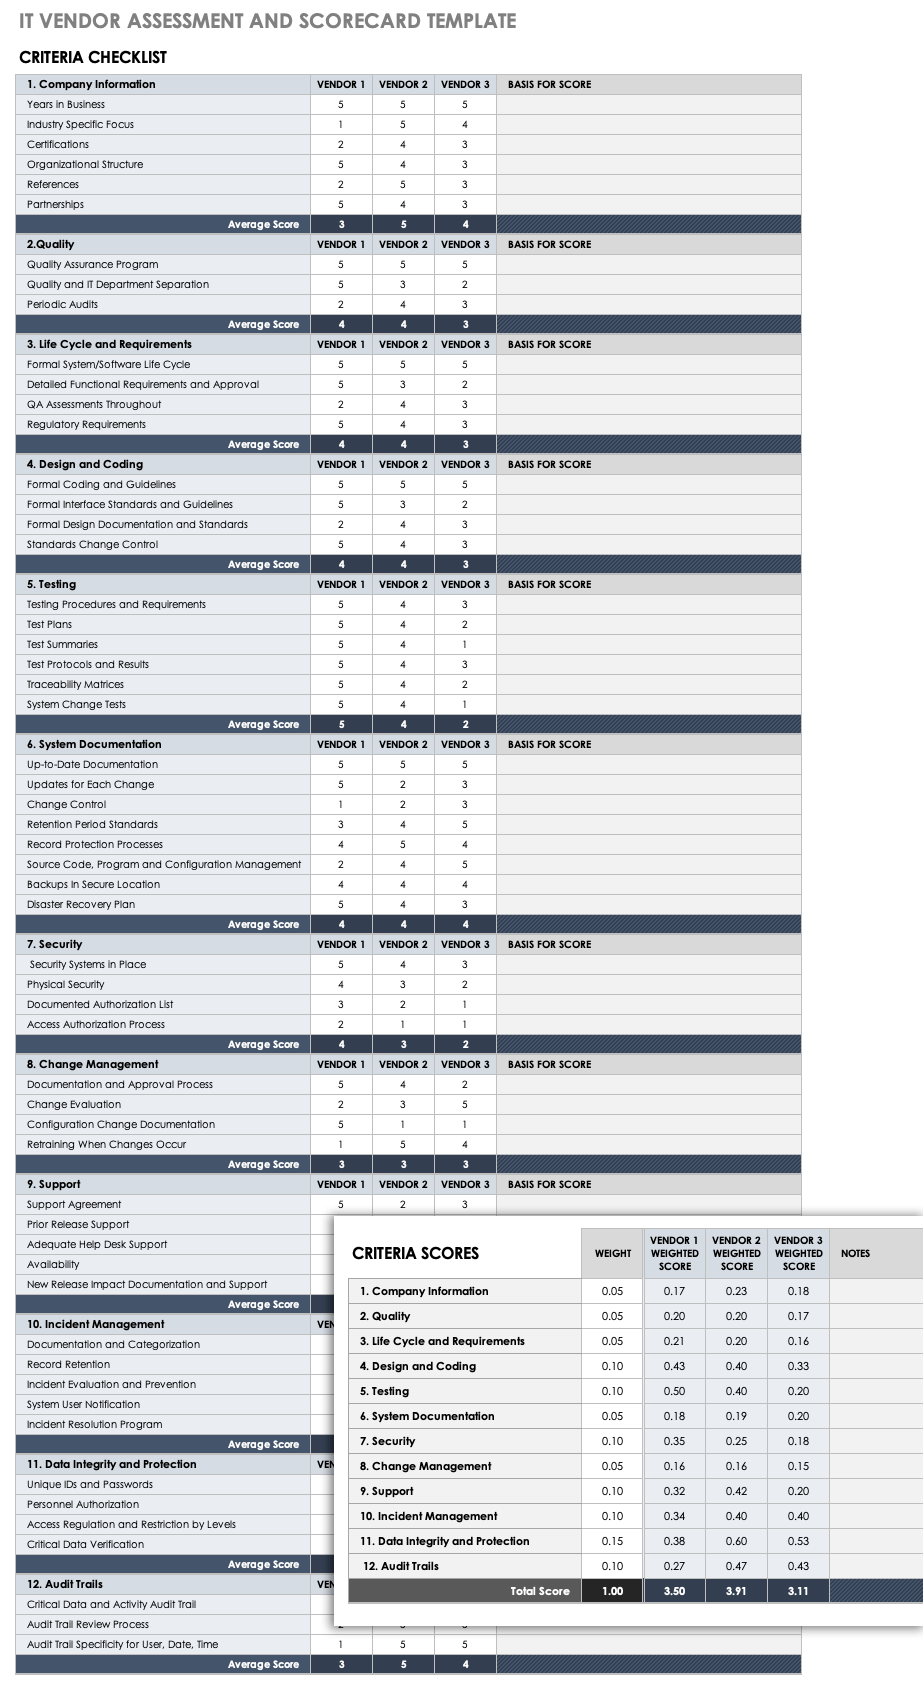 IT Vendor Assessment and Scorecard Template